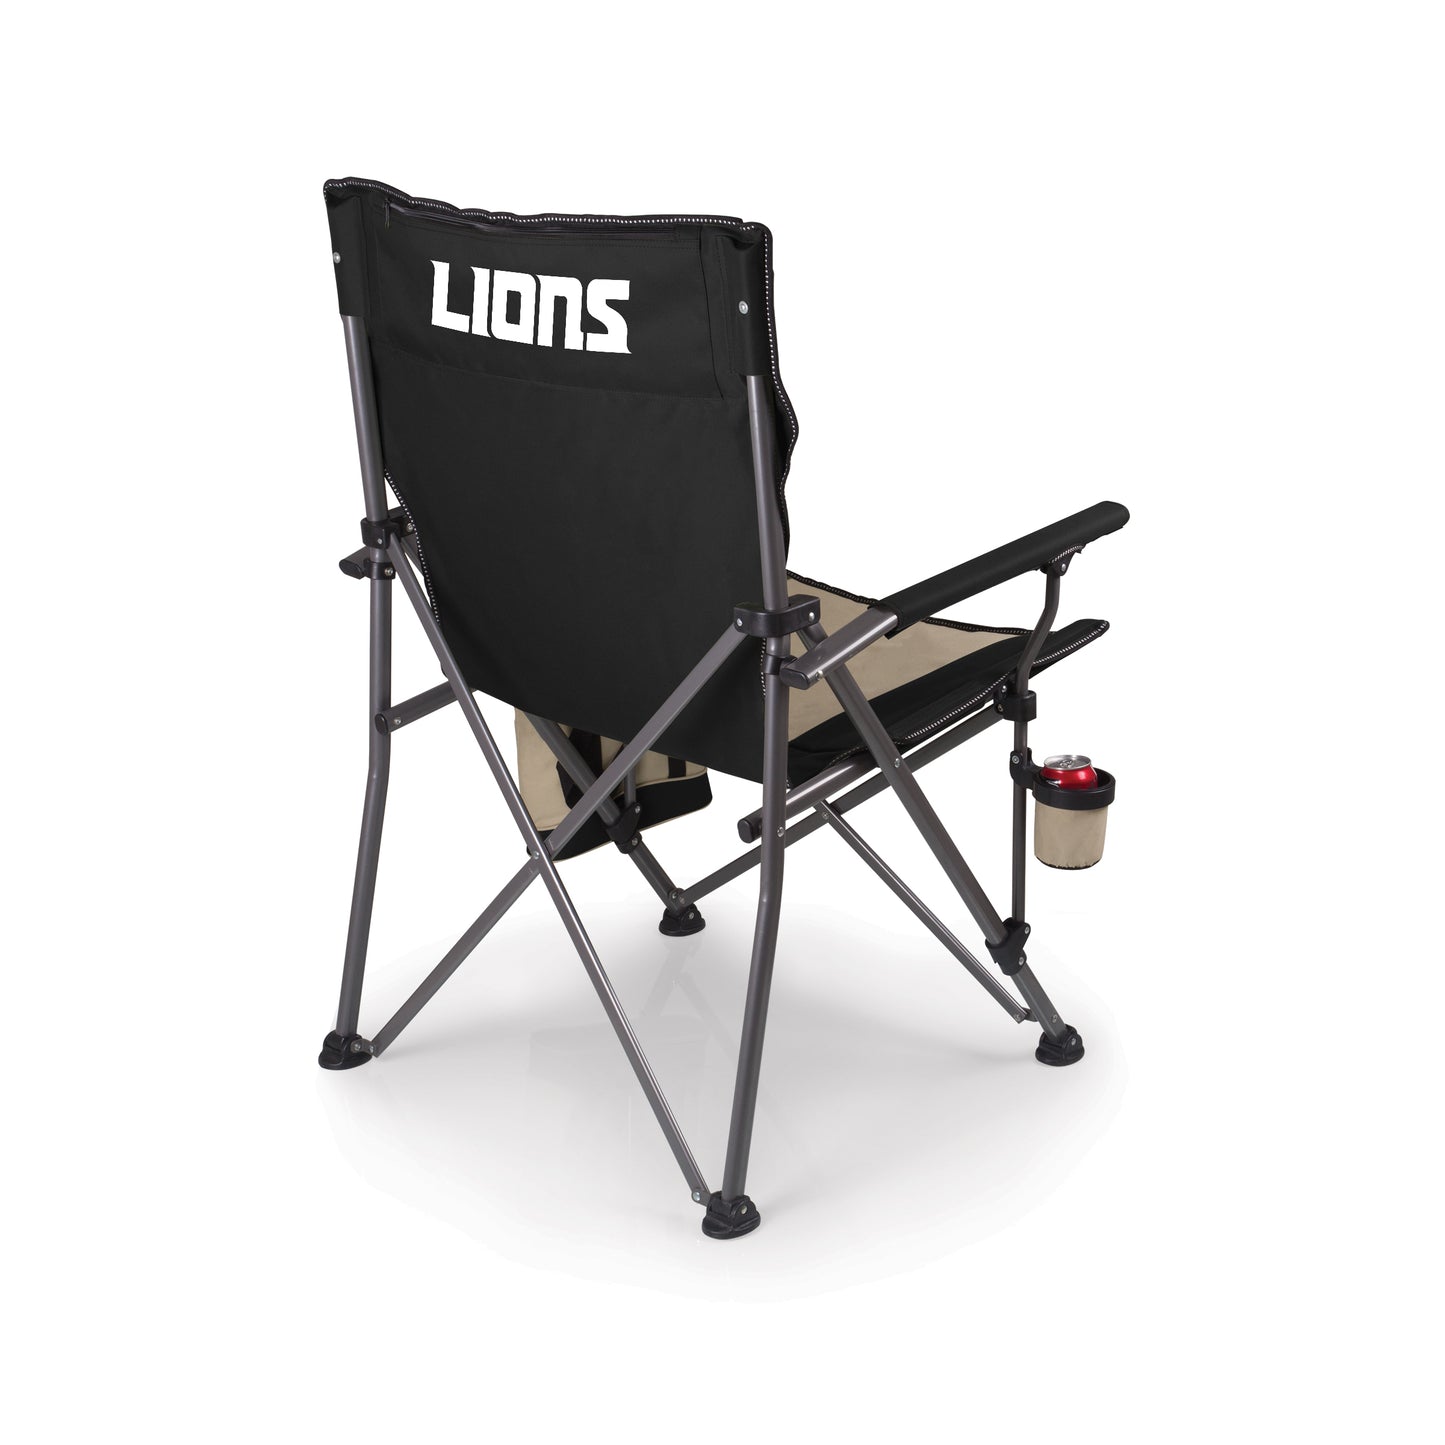 Detroit Lions - Big Bear XL Camp Chair with Cooler